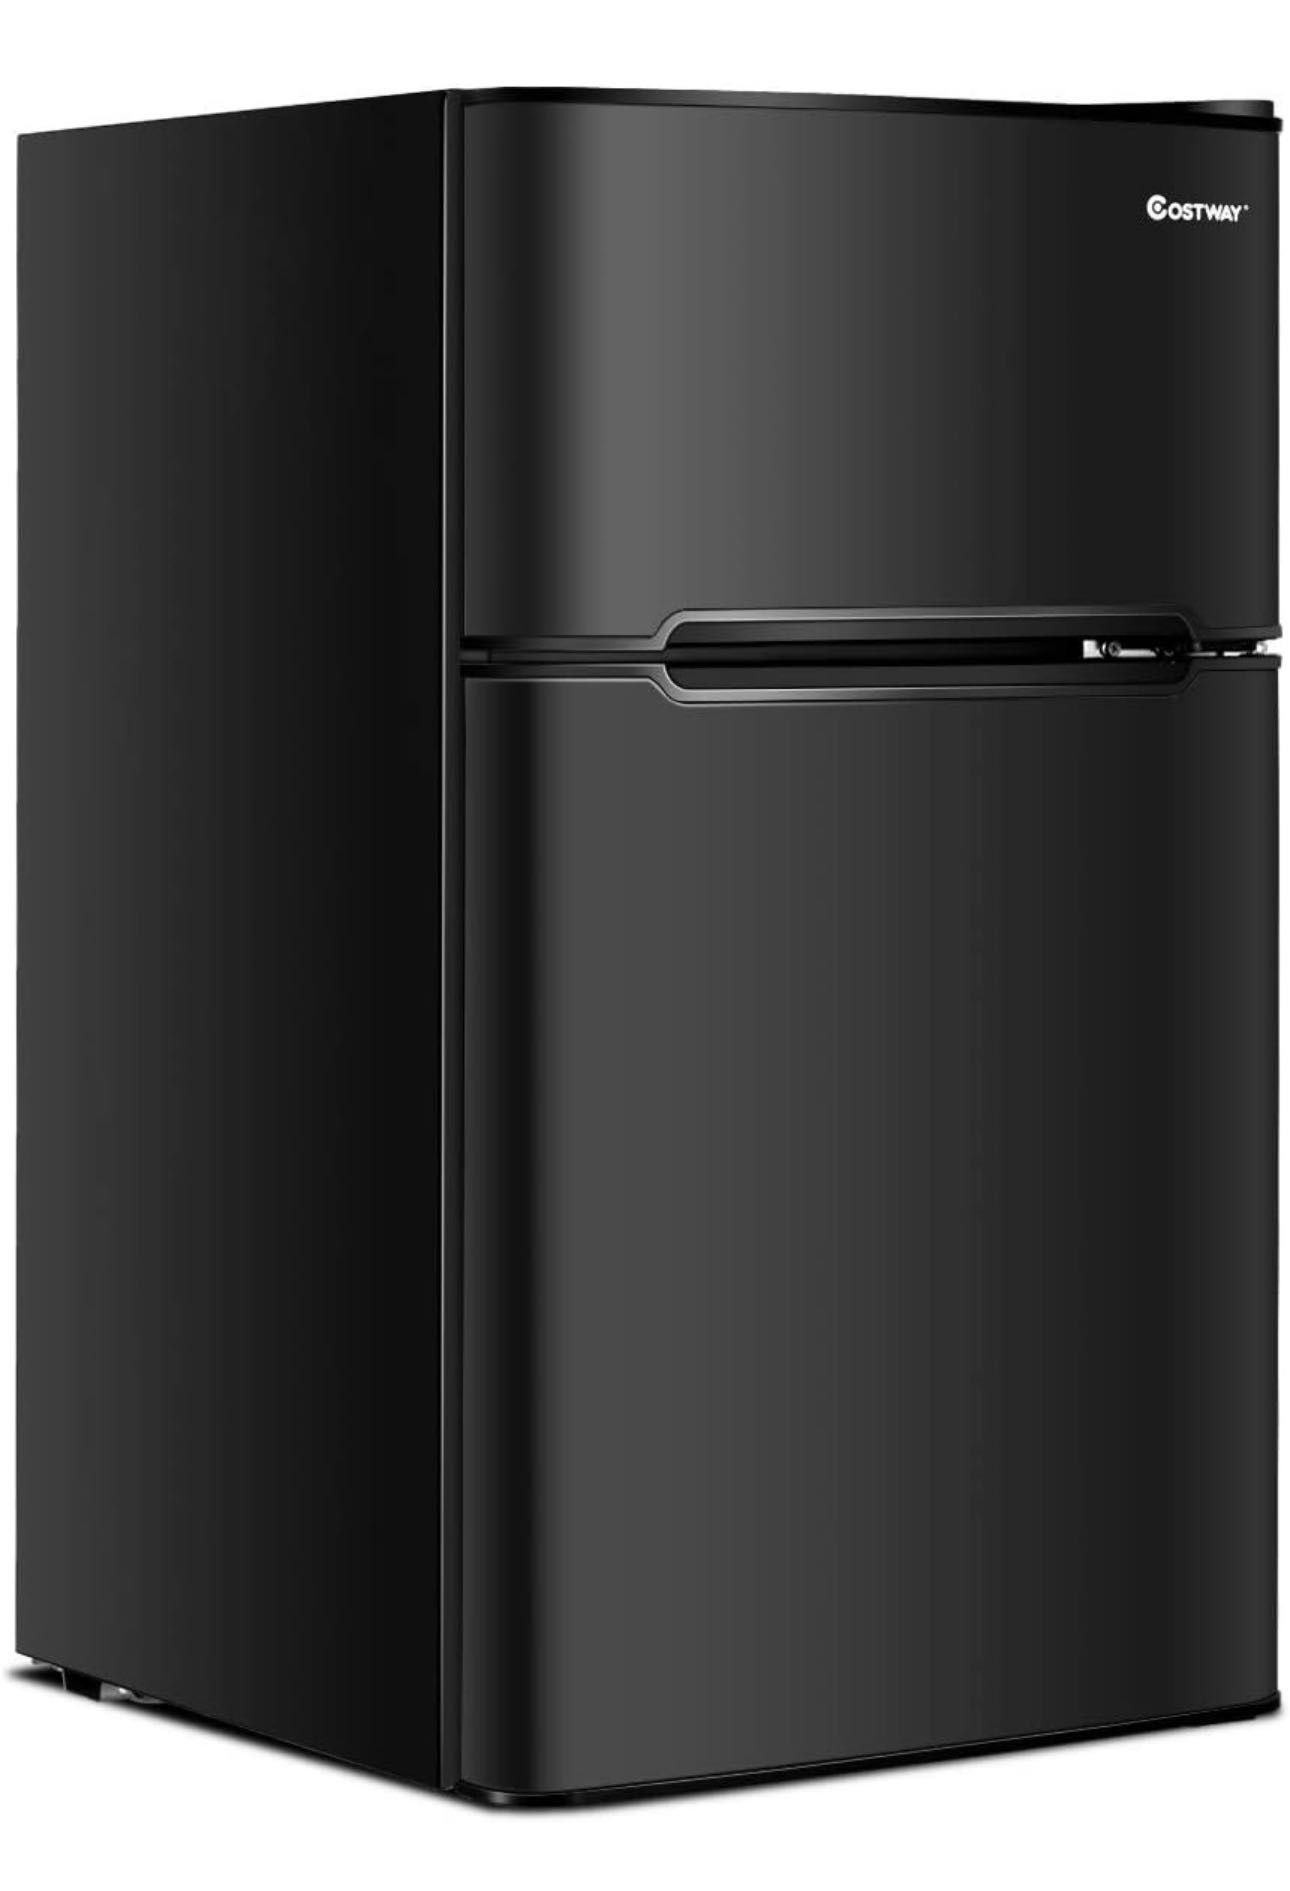 COSTWAY Compact Refrigerator, 3.2 cu ft.